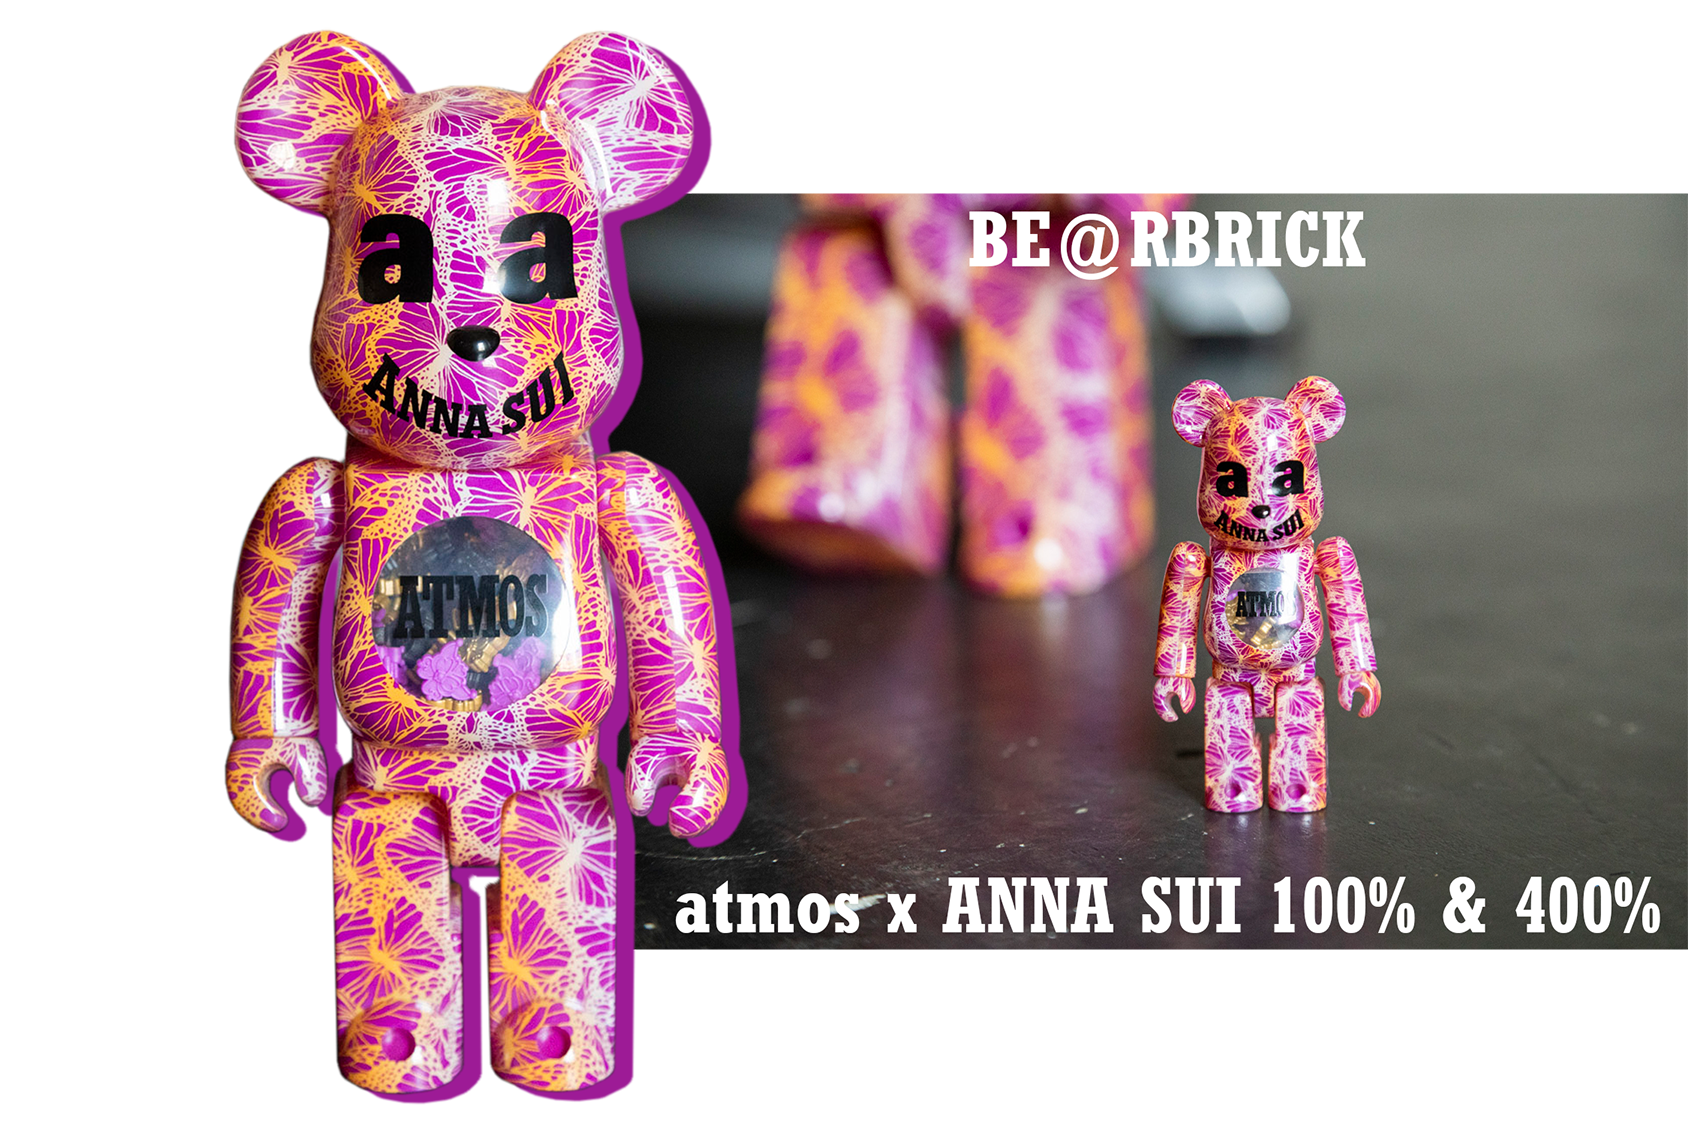 ANNA SUI BE@RBRICK 400% & 100%